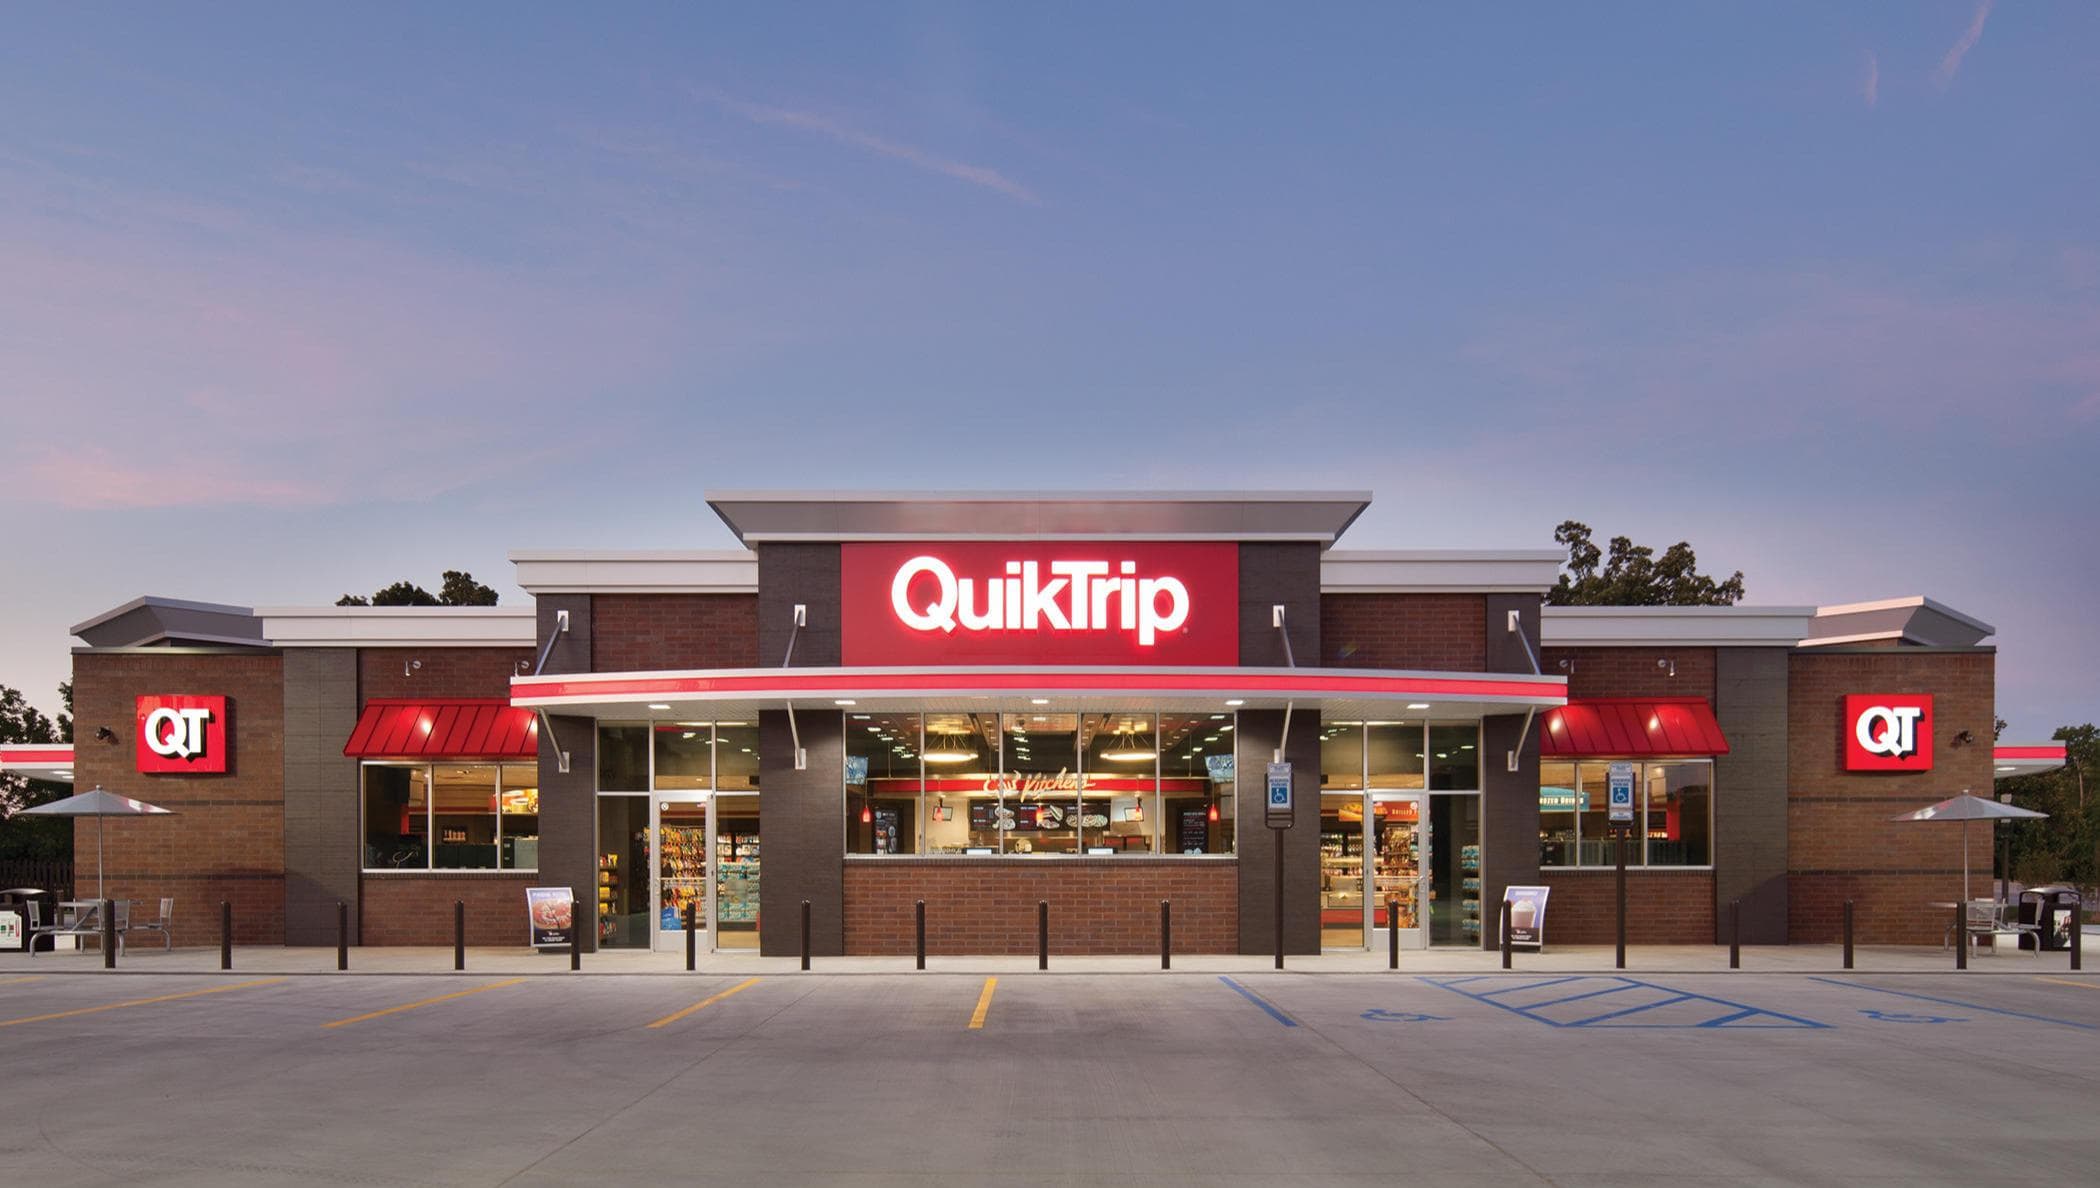 QuikTrip - Arlington (TX 76015), US, any gas station near me